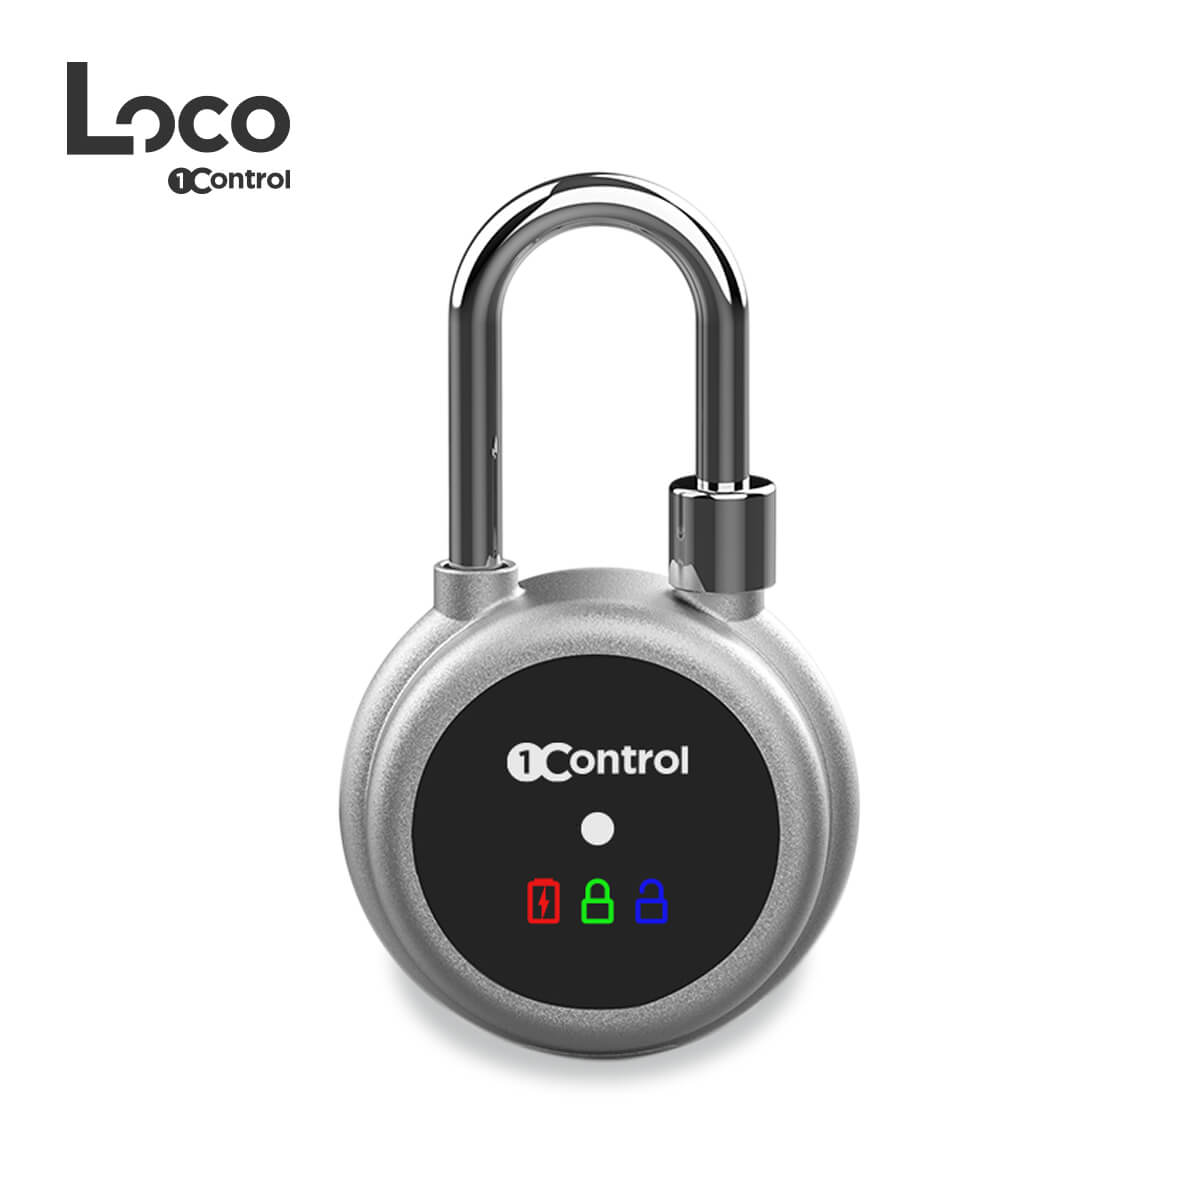 1Control LOCO electronic smart padlock